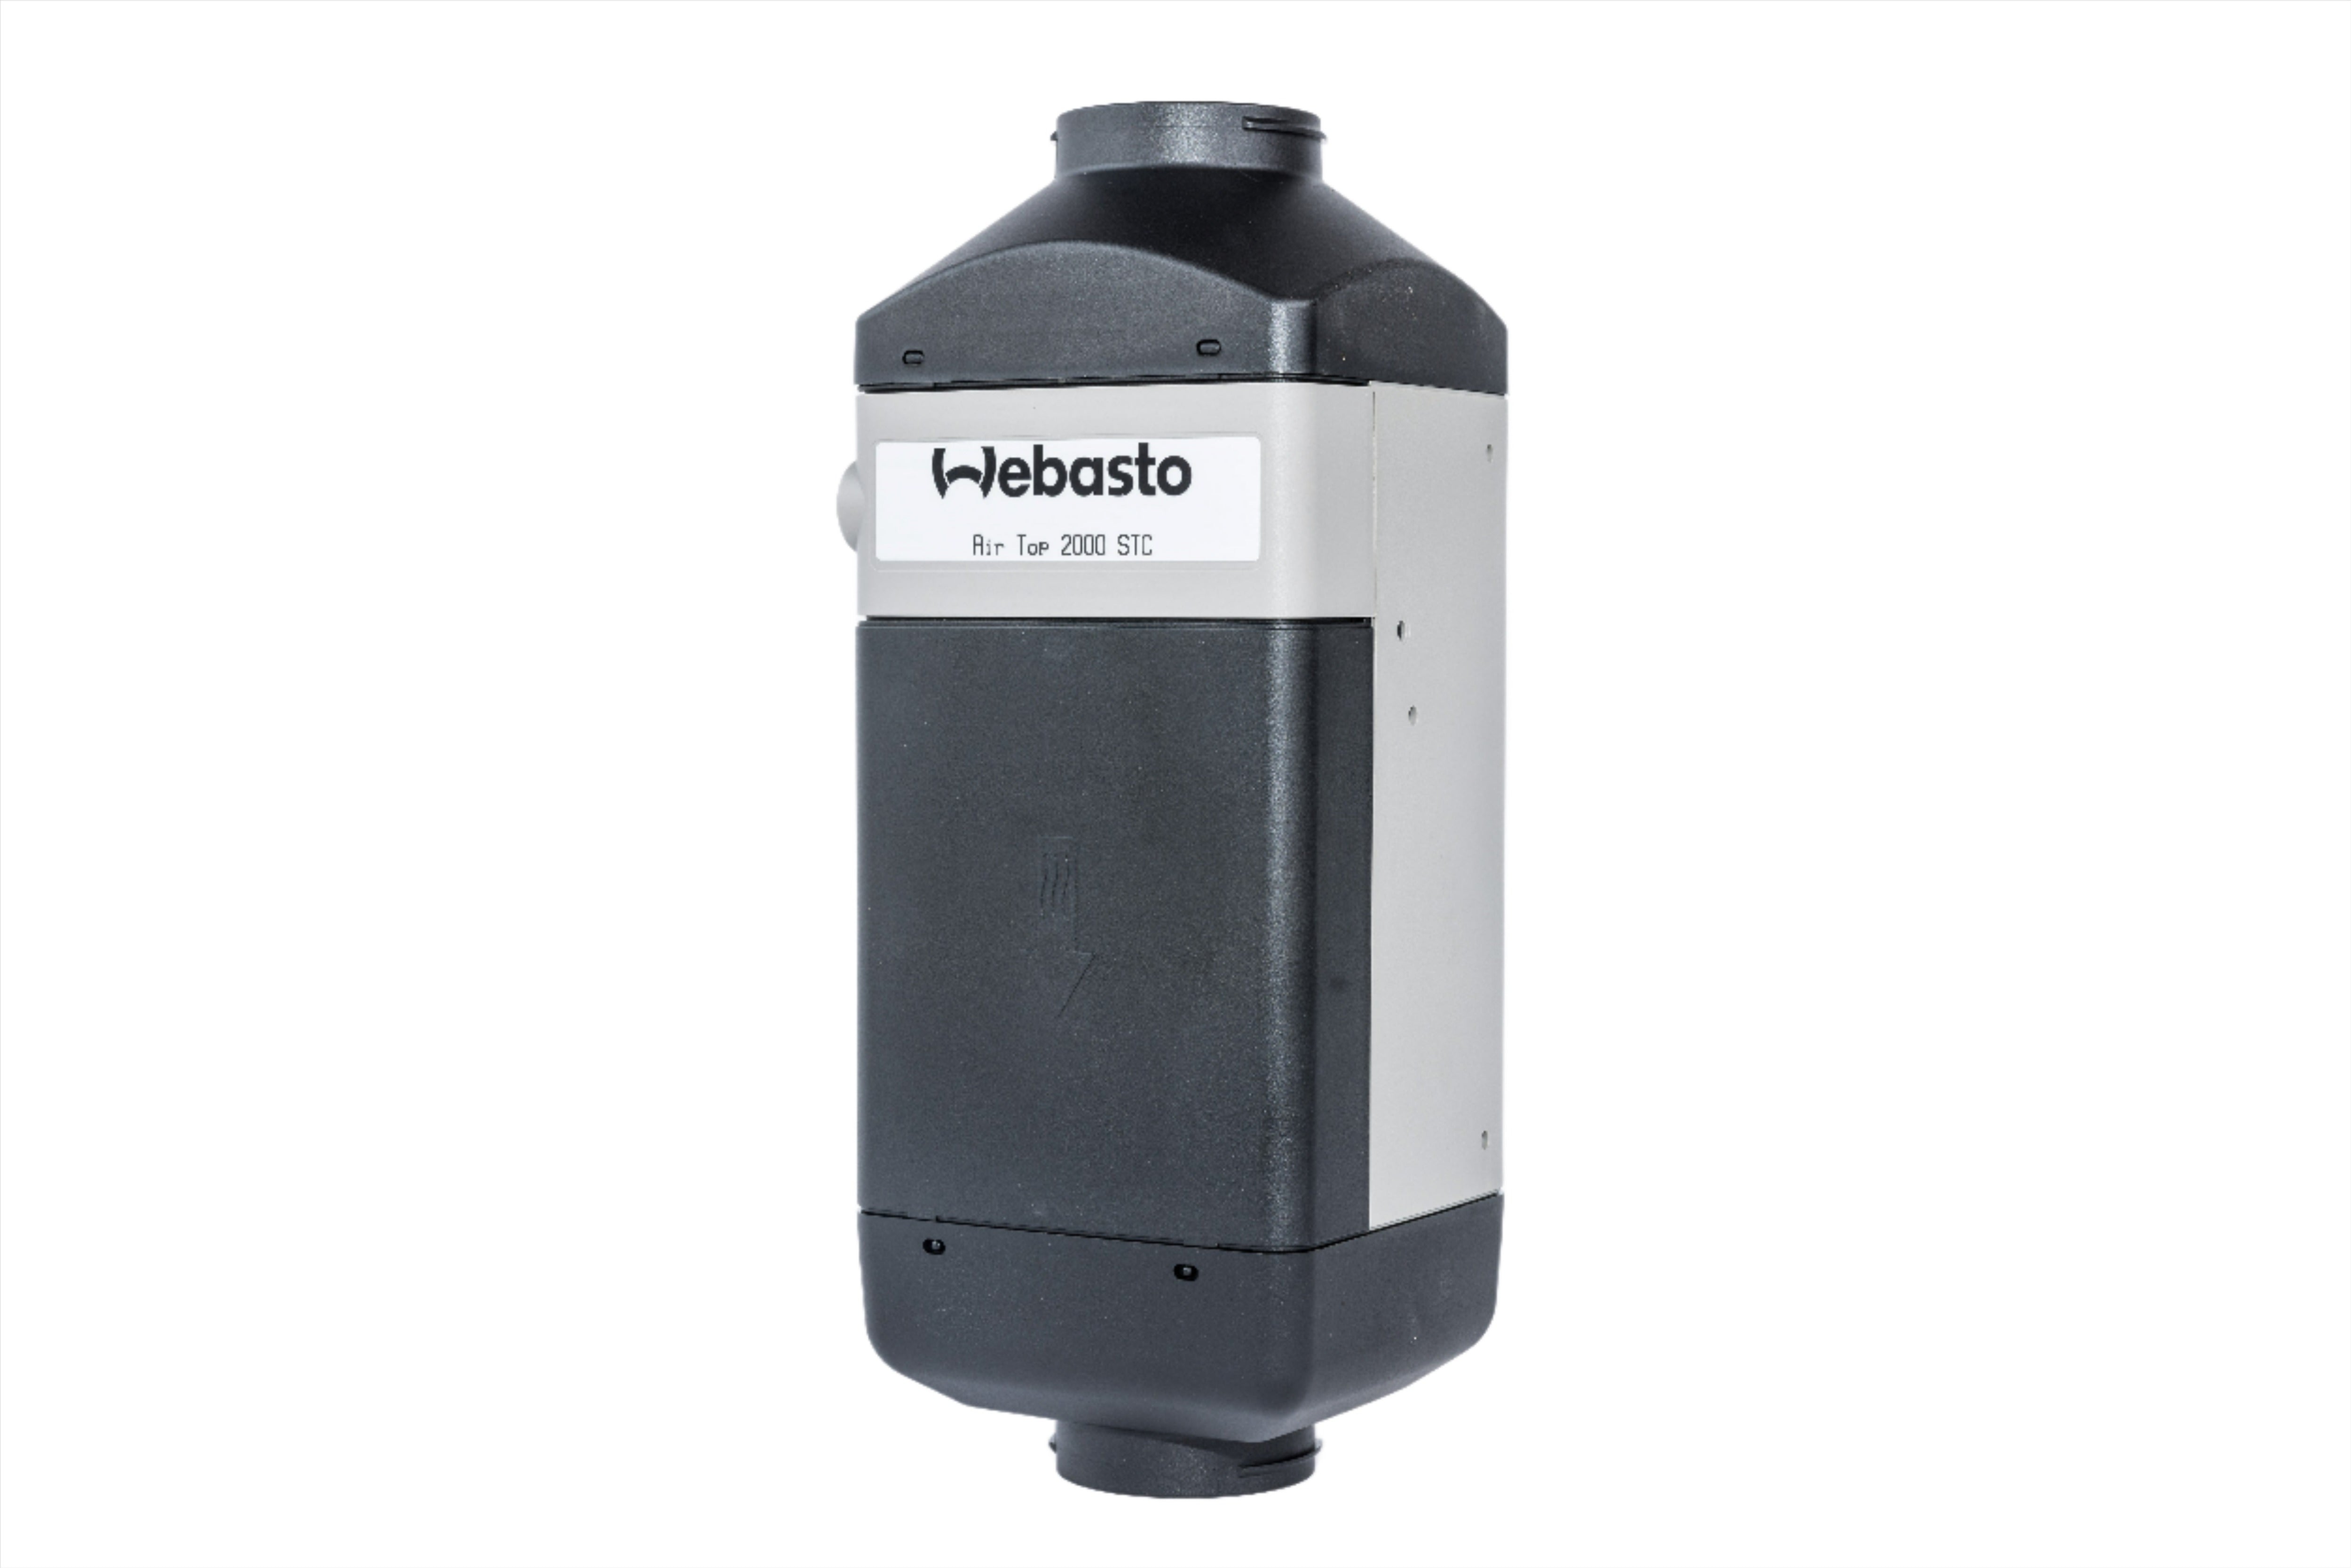 Webasto Air Top 2000 STC 12v 2kW Diesel Heater Dealer Refurbished 90-3-0025